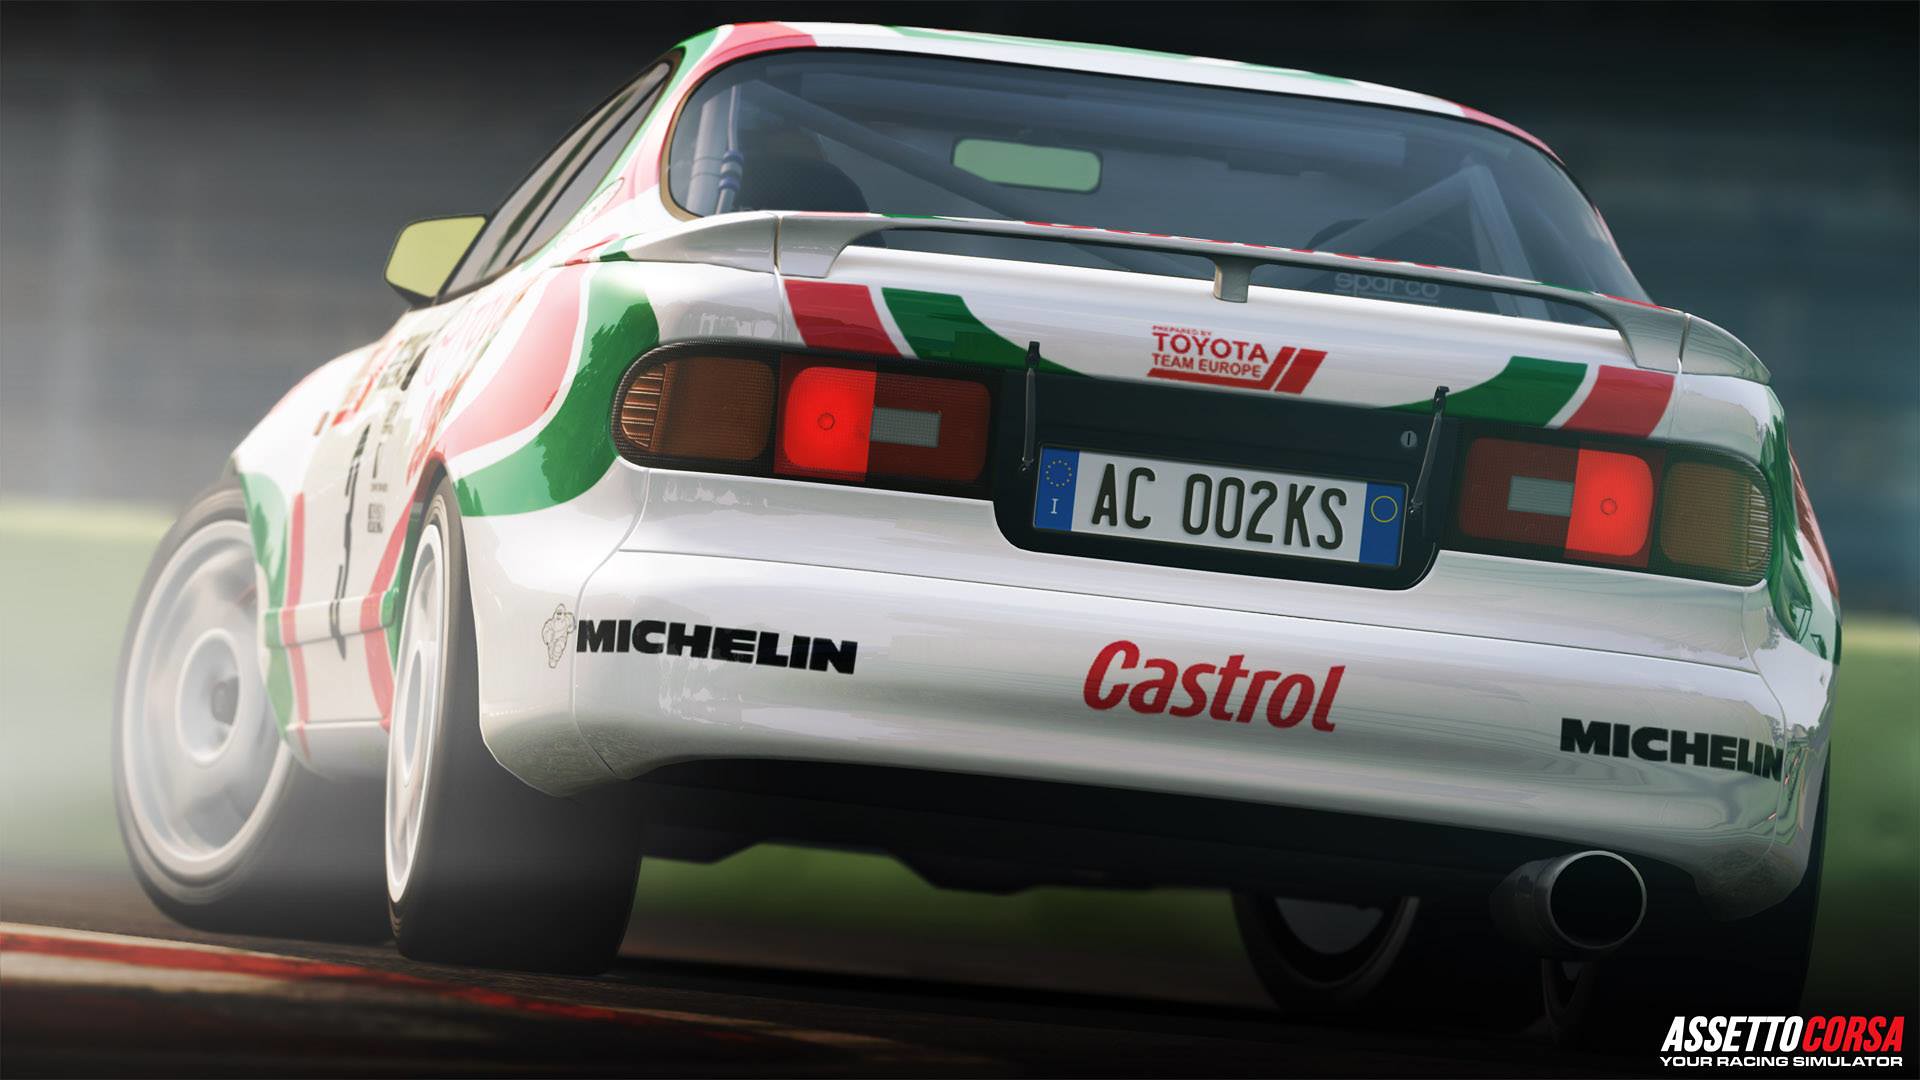 Assetto Corsa - Ready To Race DLC